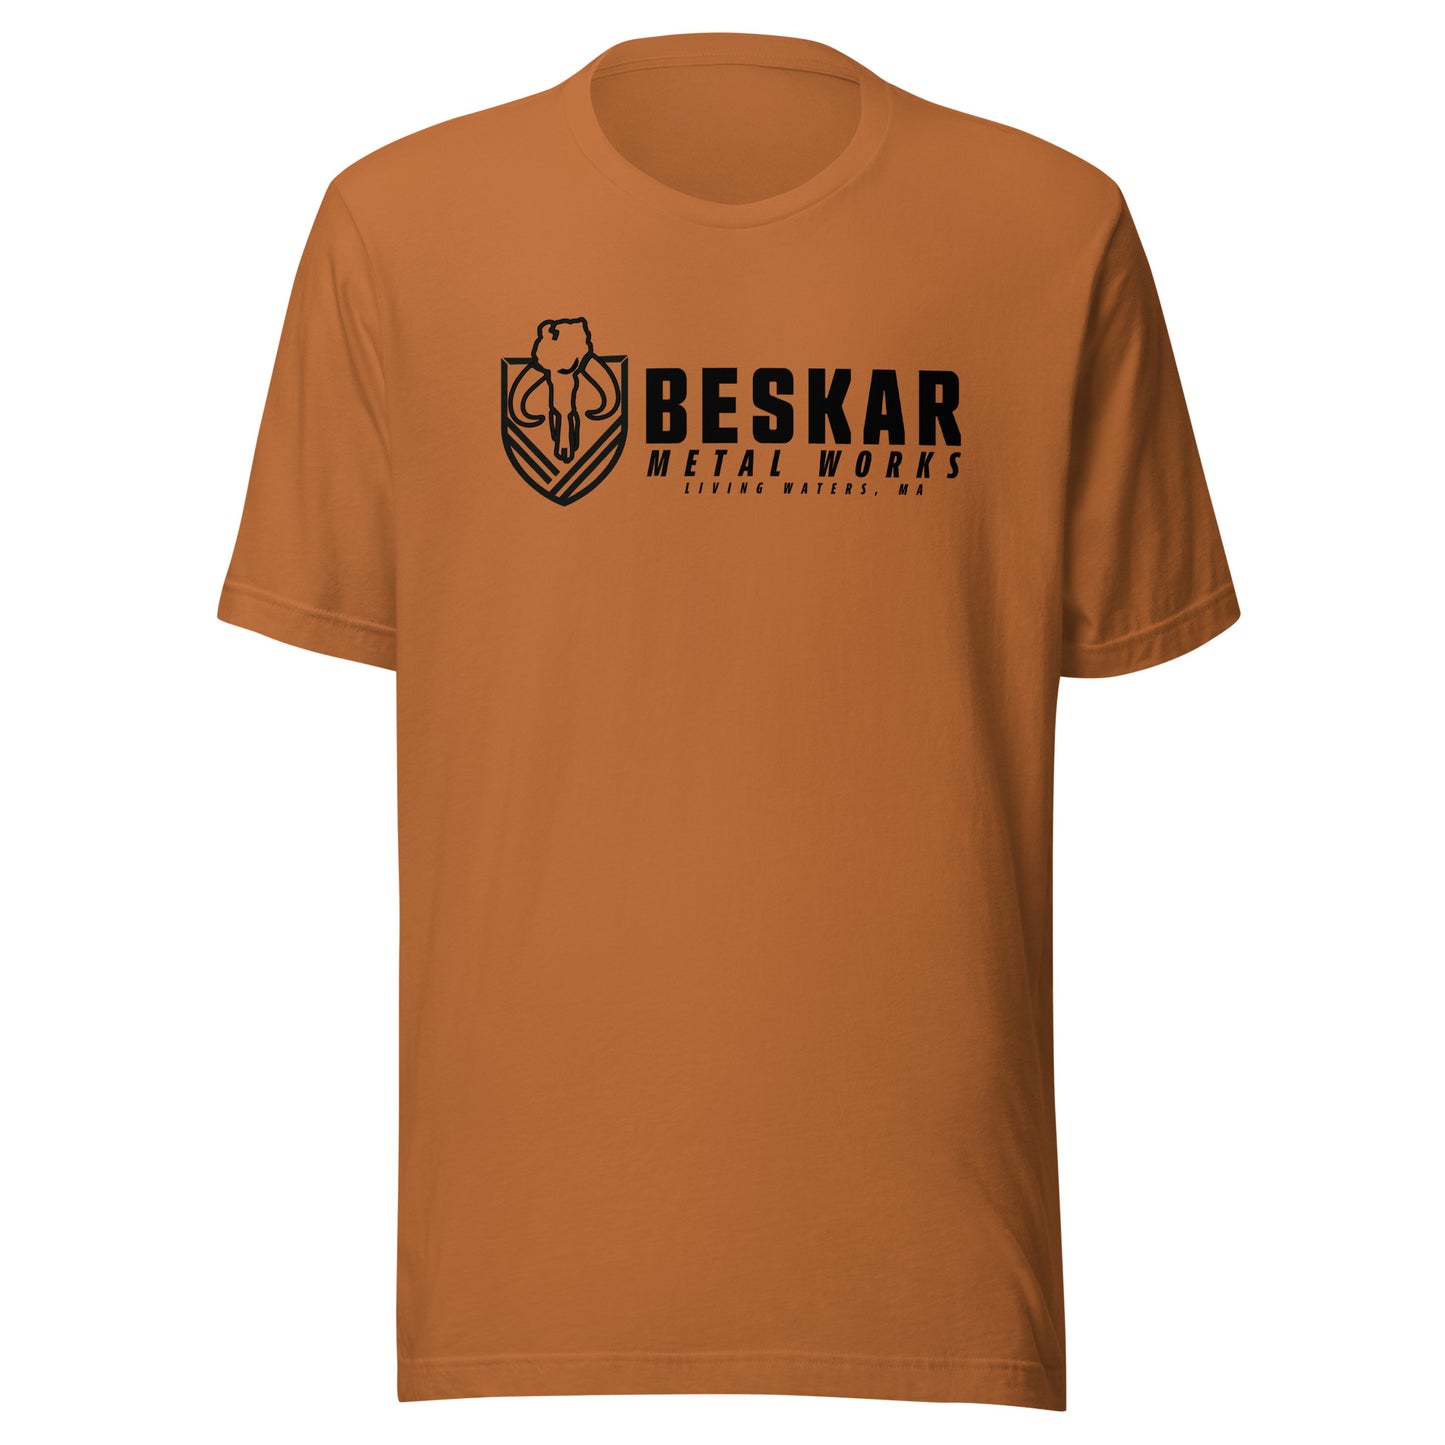 Beskar Metal Works T-shirt